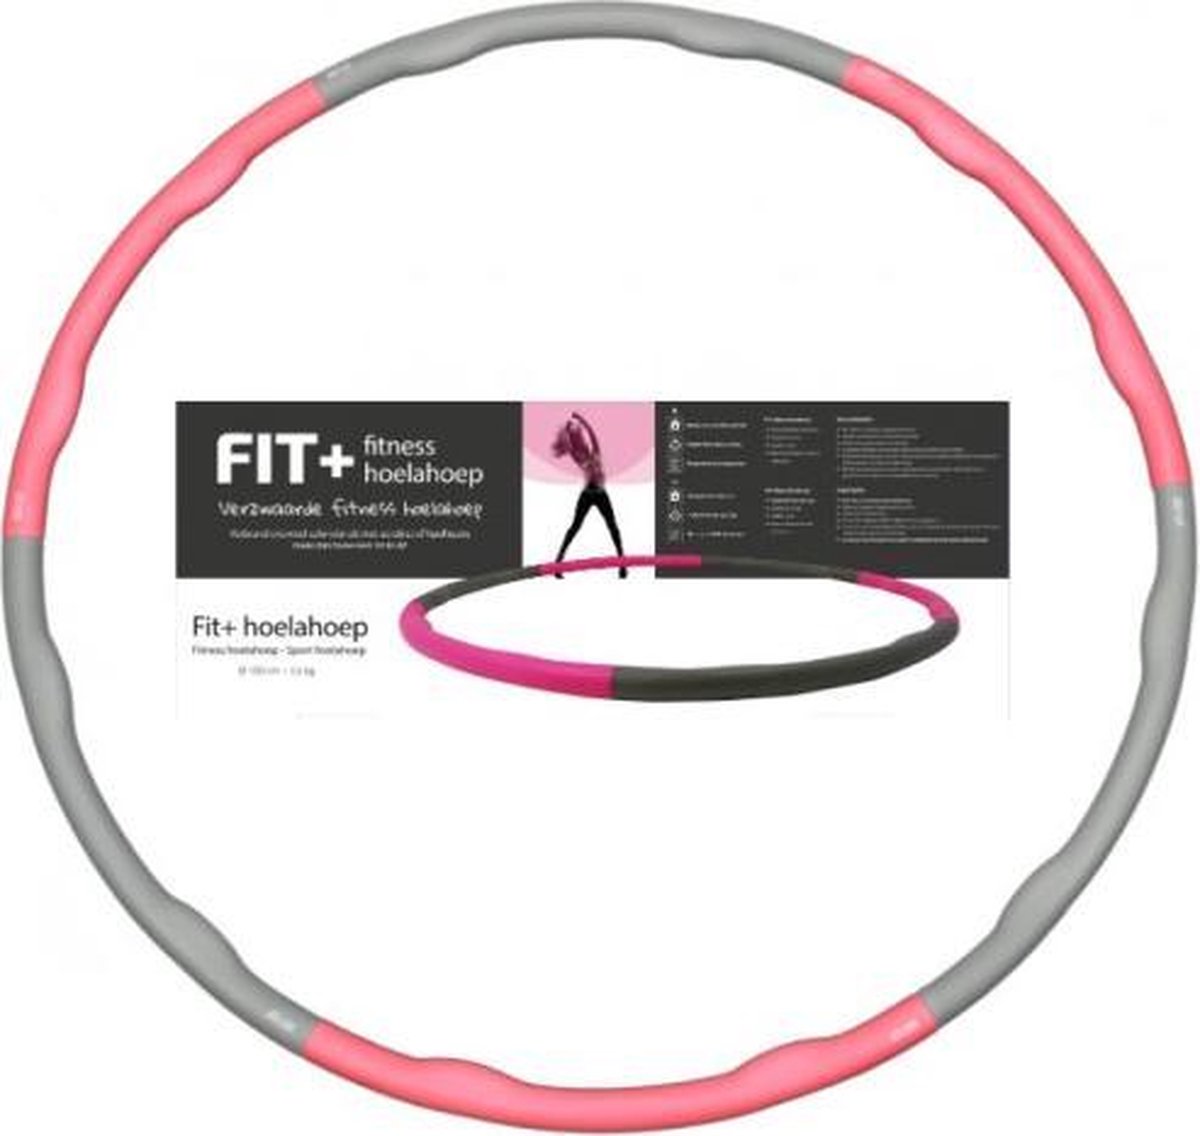 Sportbay® FIT+ fitness hoelahoep (1.8 kg) incl DVD - Sportbay